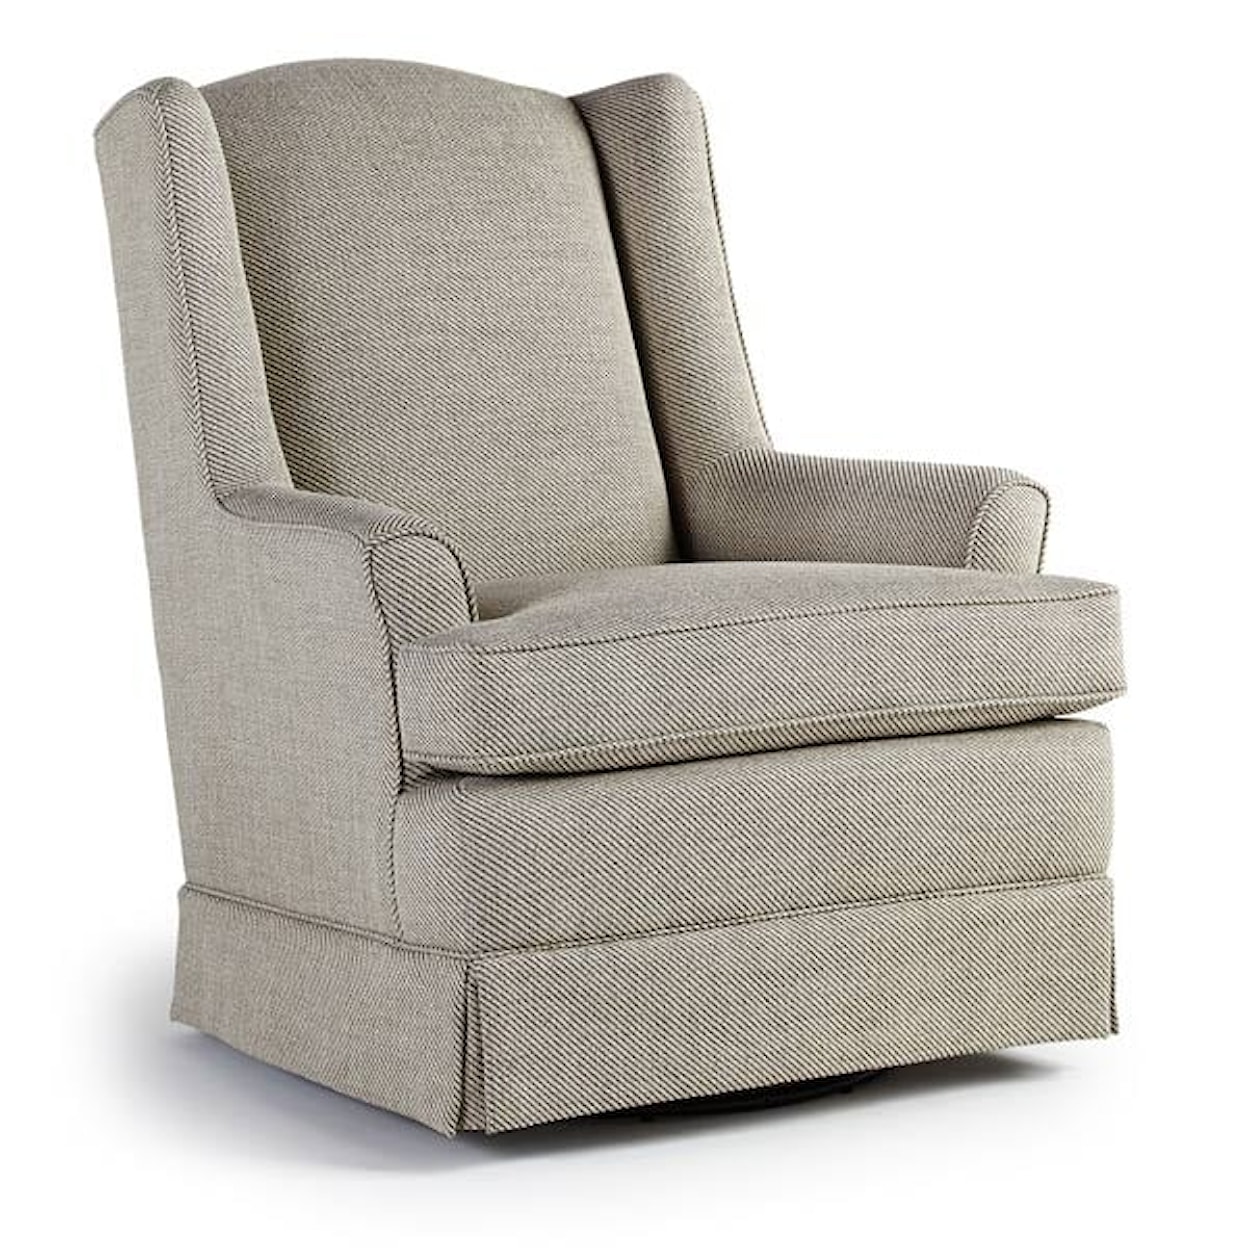 Best Home Furnishings Natasha Upholstered Chairs